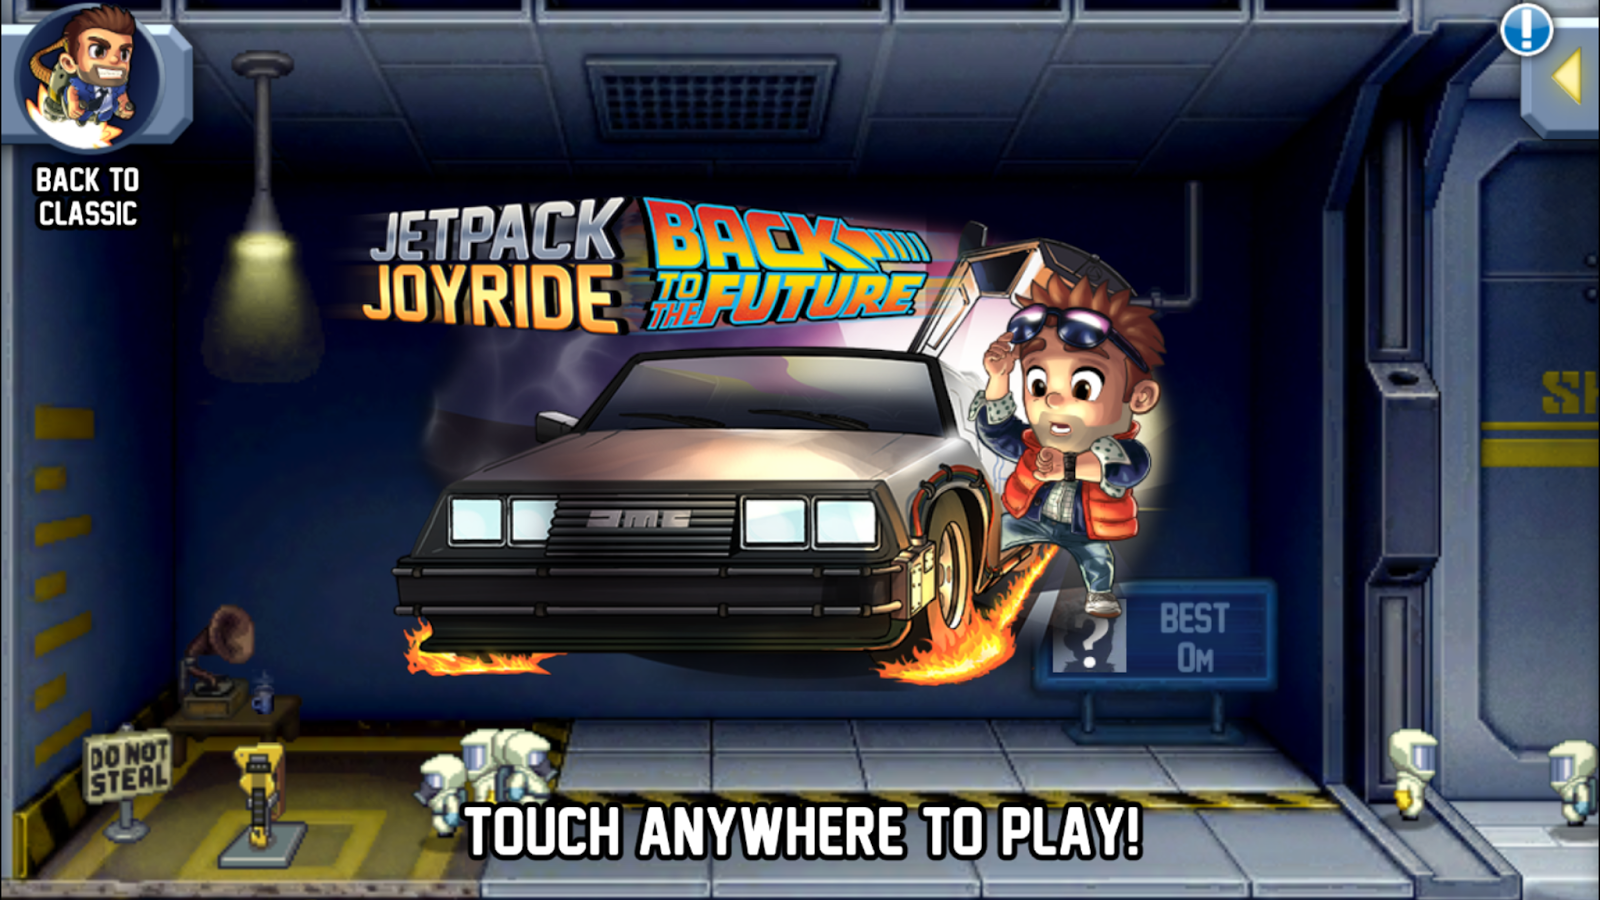 Jetpack joyride game free play